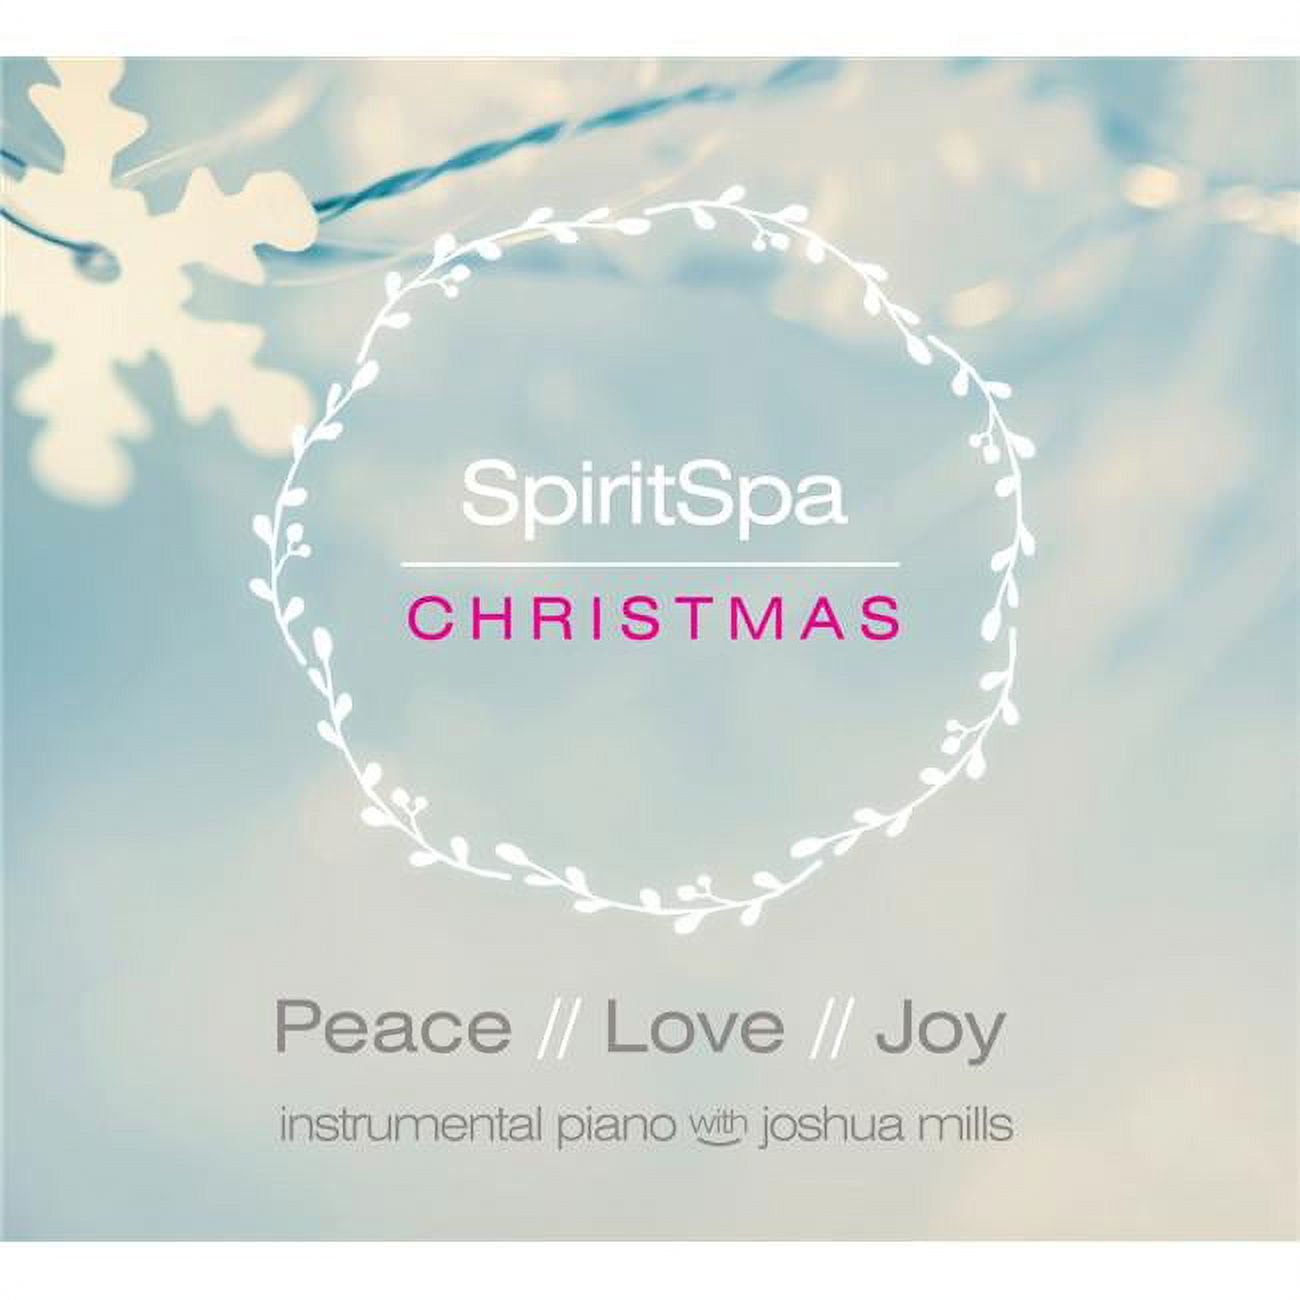 New Wine International 135172 Audio Cd - Spirit Spa Christmas